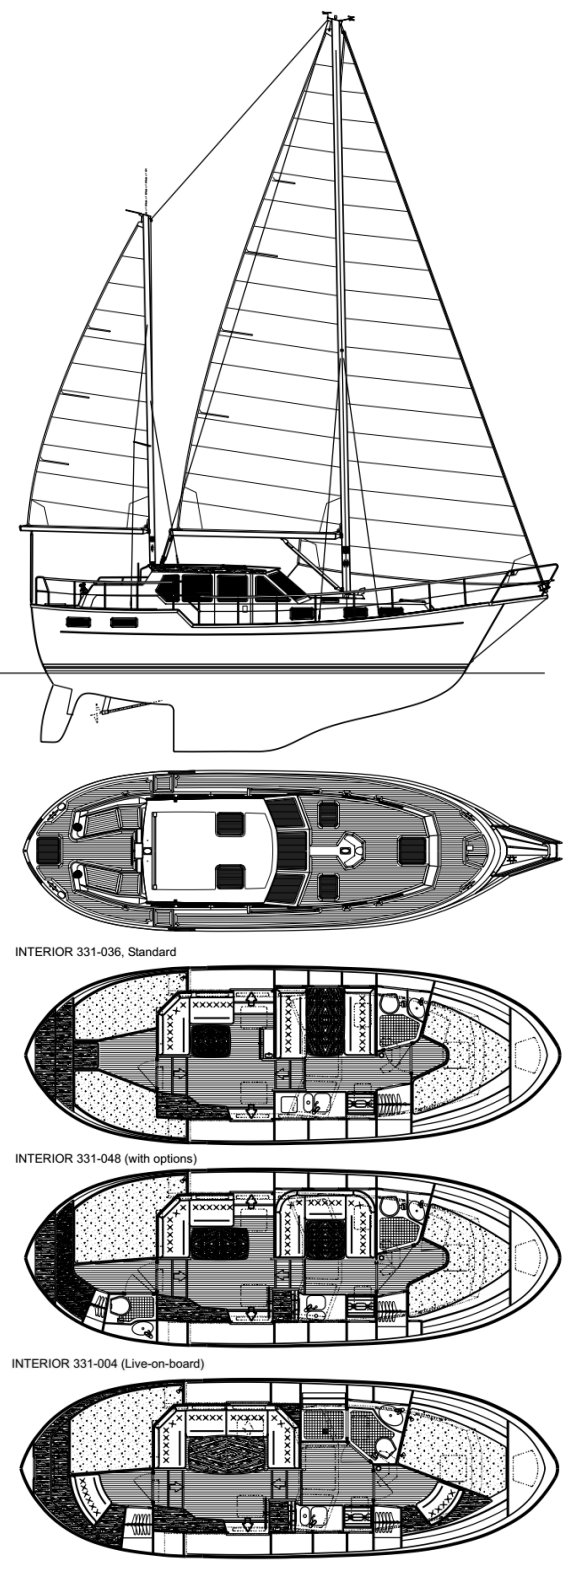 Drawing of Nauticat 331